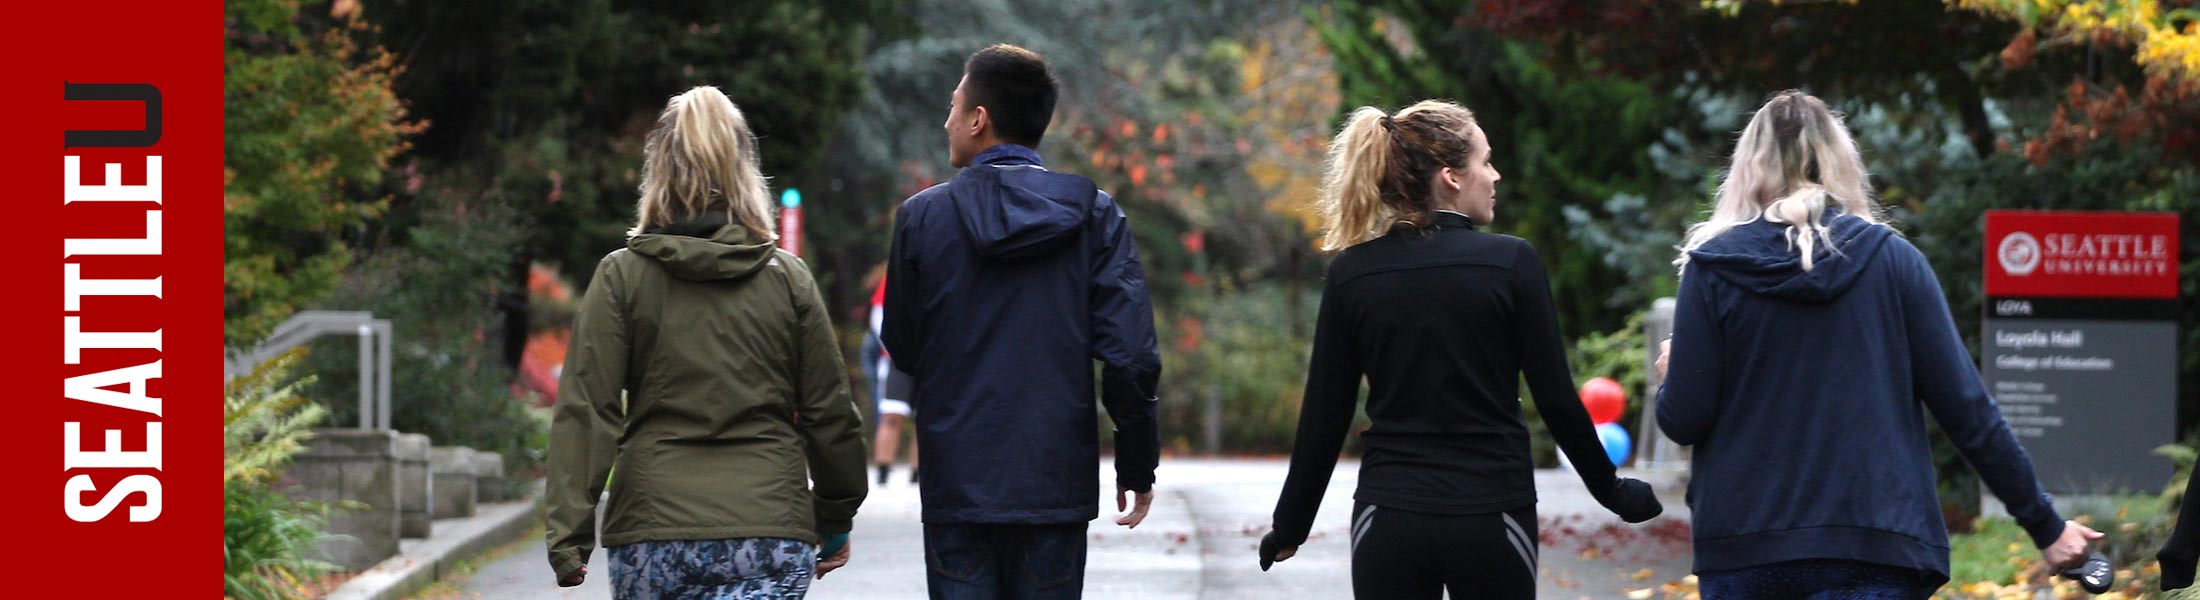 Students walking on Seattle University campus